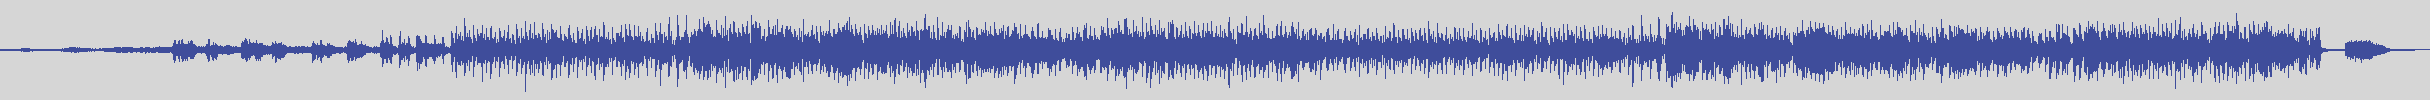 digiphonic_records [DPR006] Nino D'Angelo - Trentuno Agosto [Original Mix] audio wave form